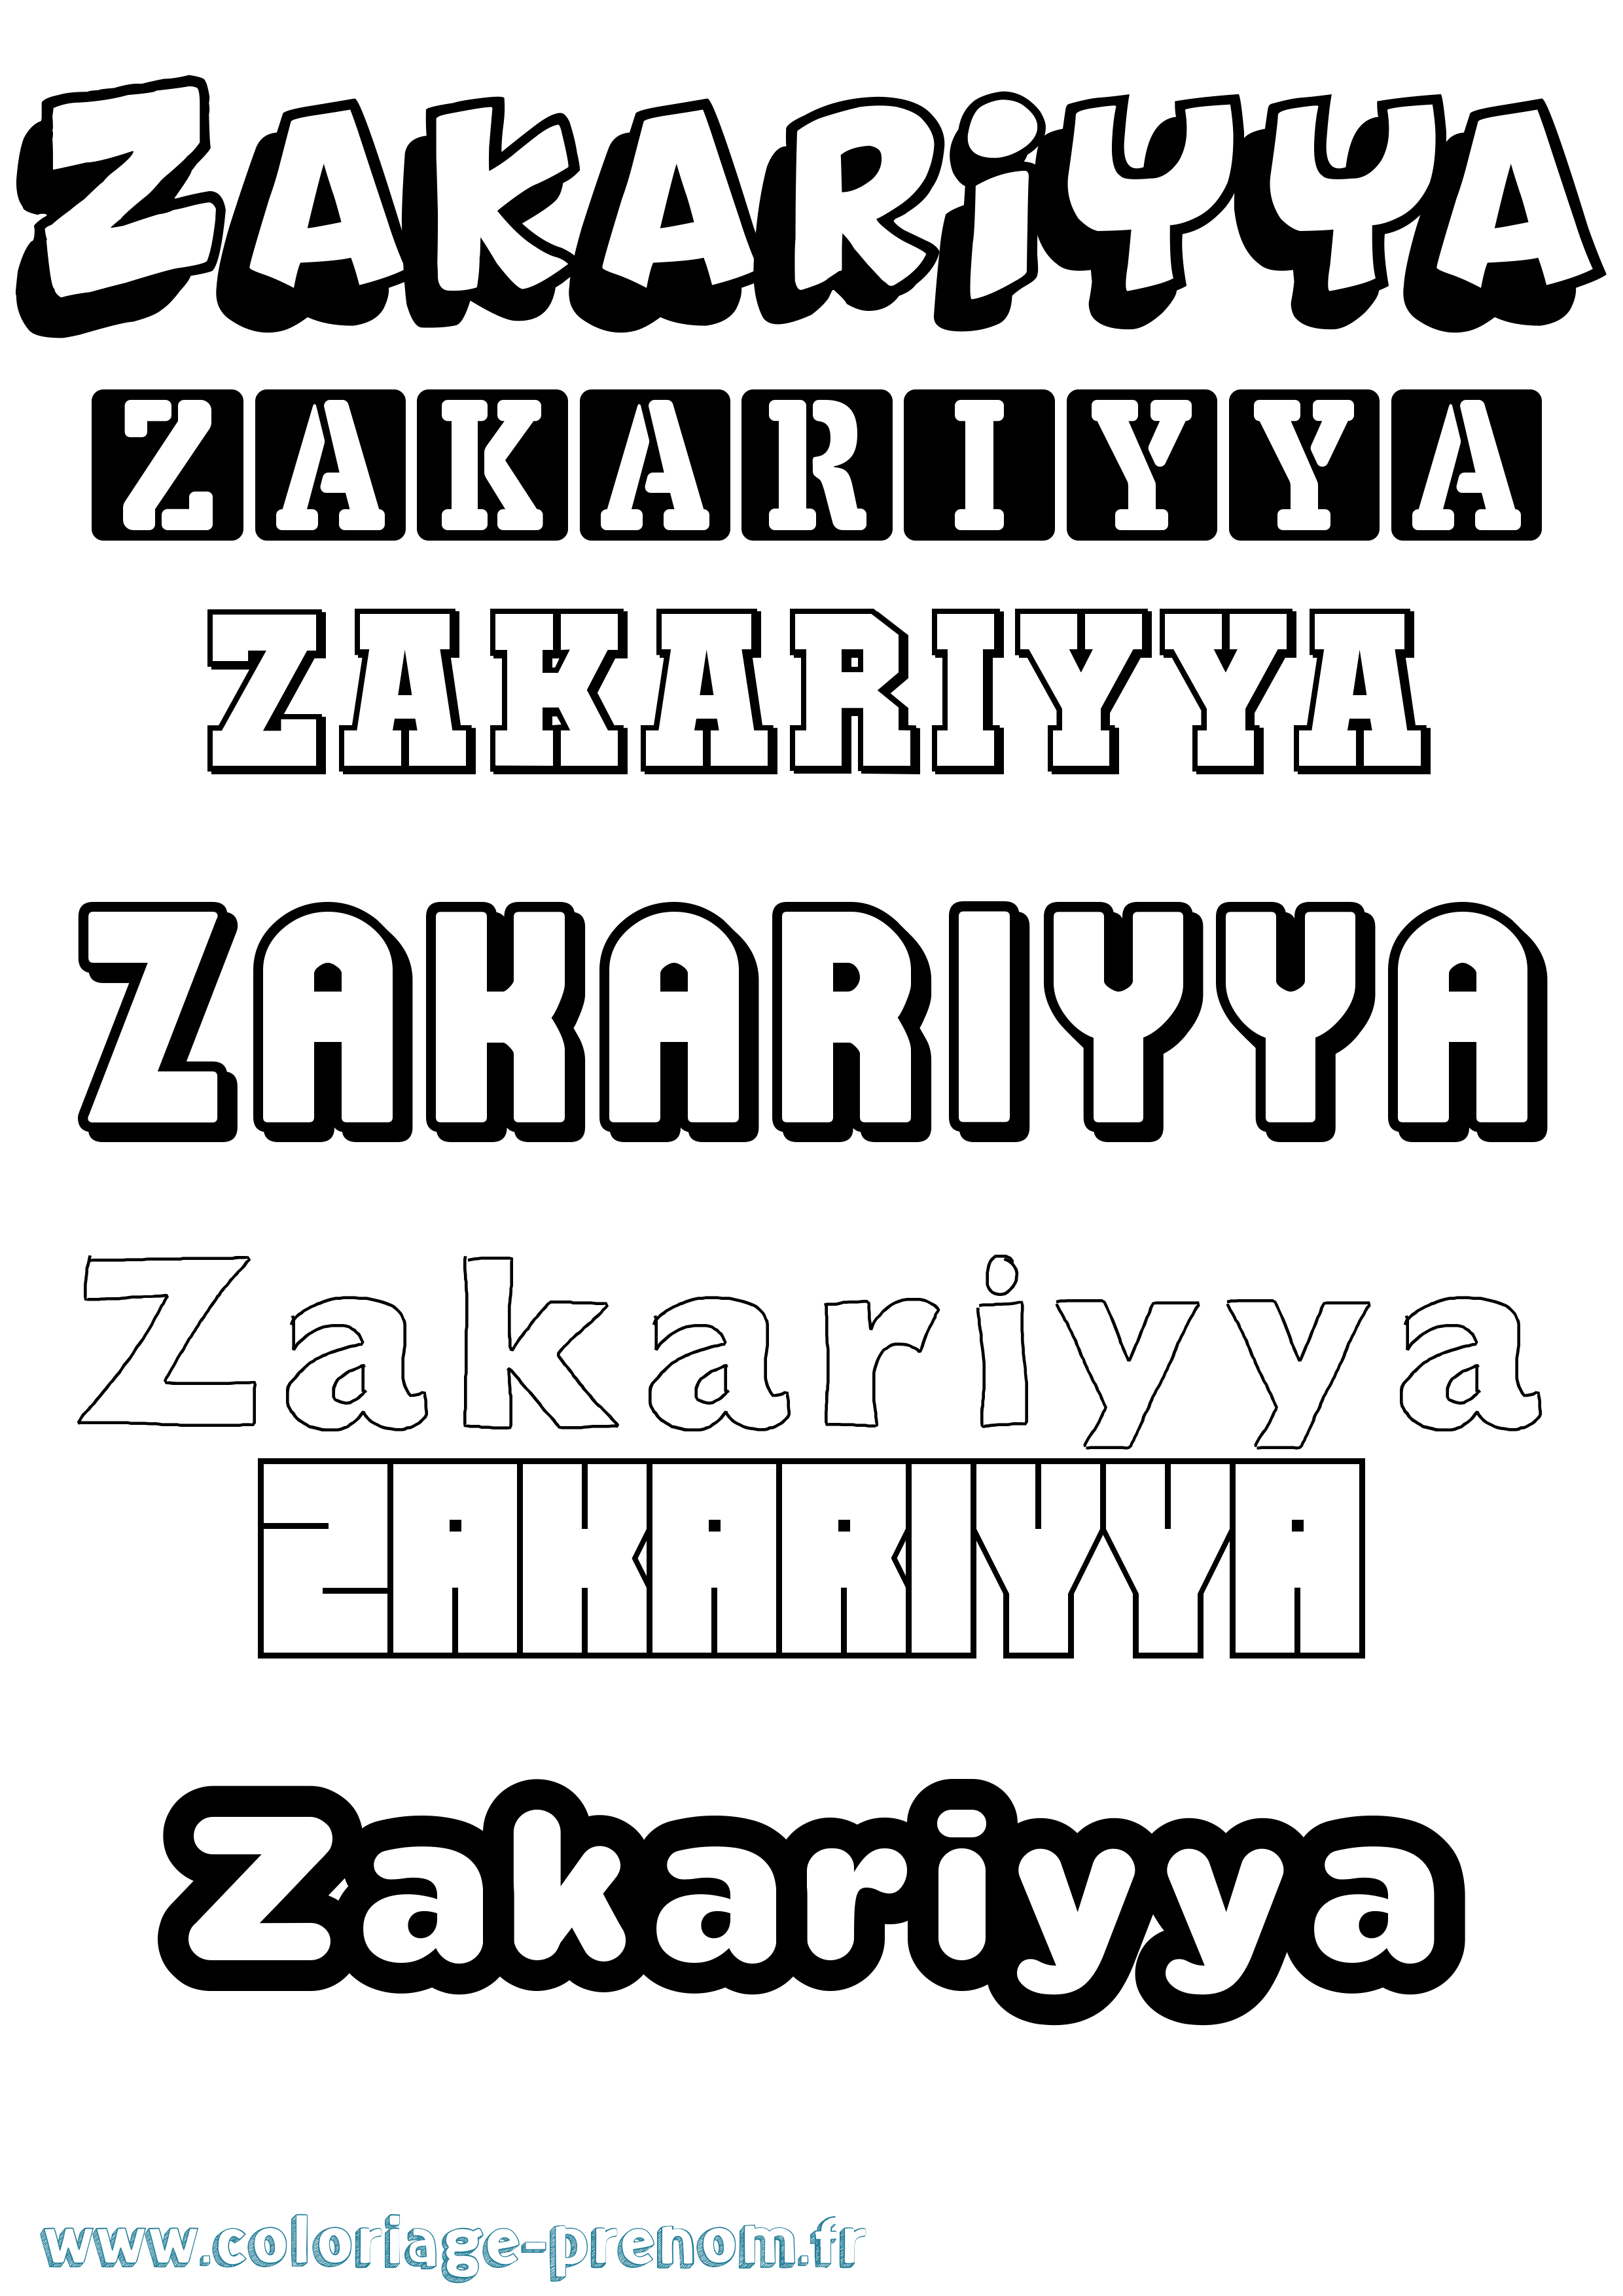 Coloriage prénom Zakariyya Simple